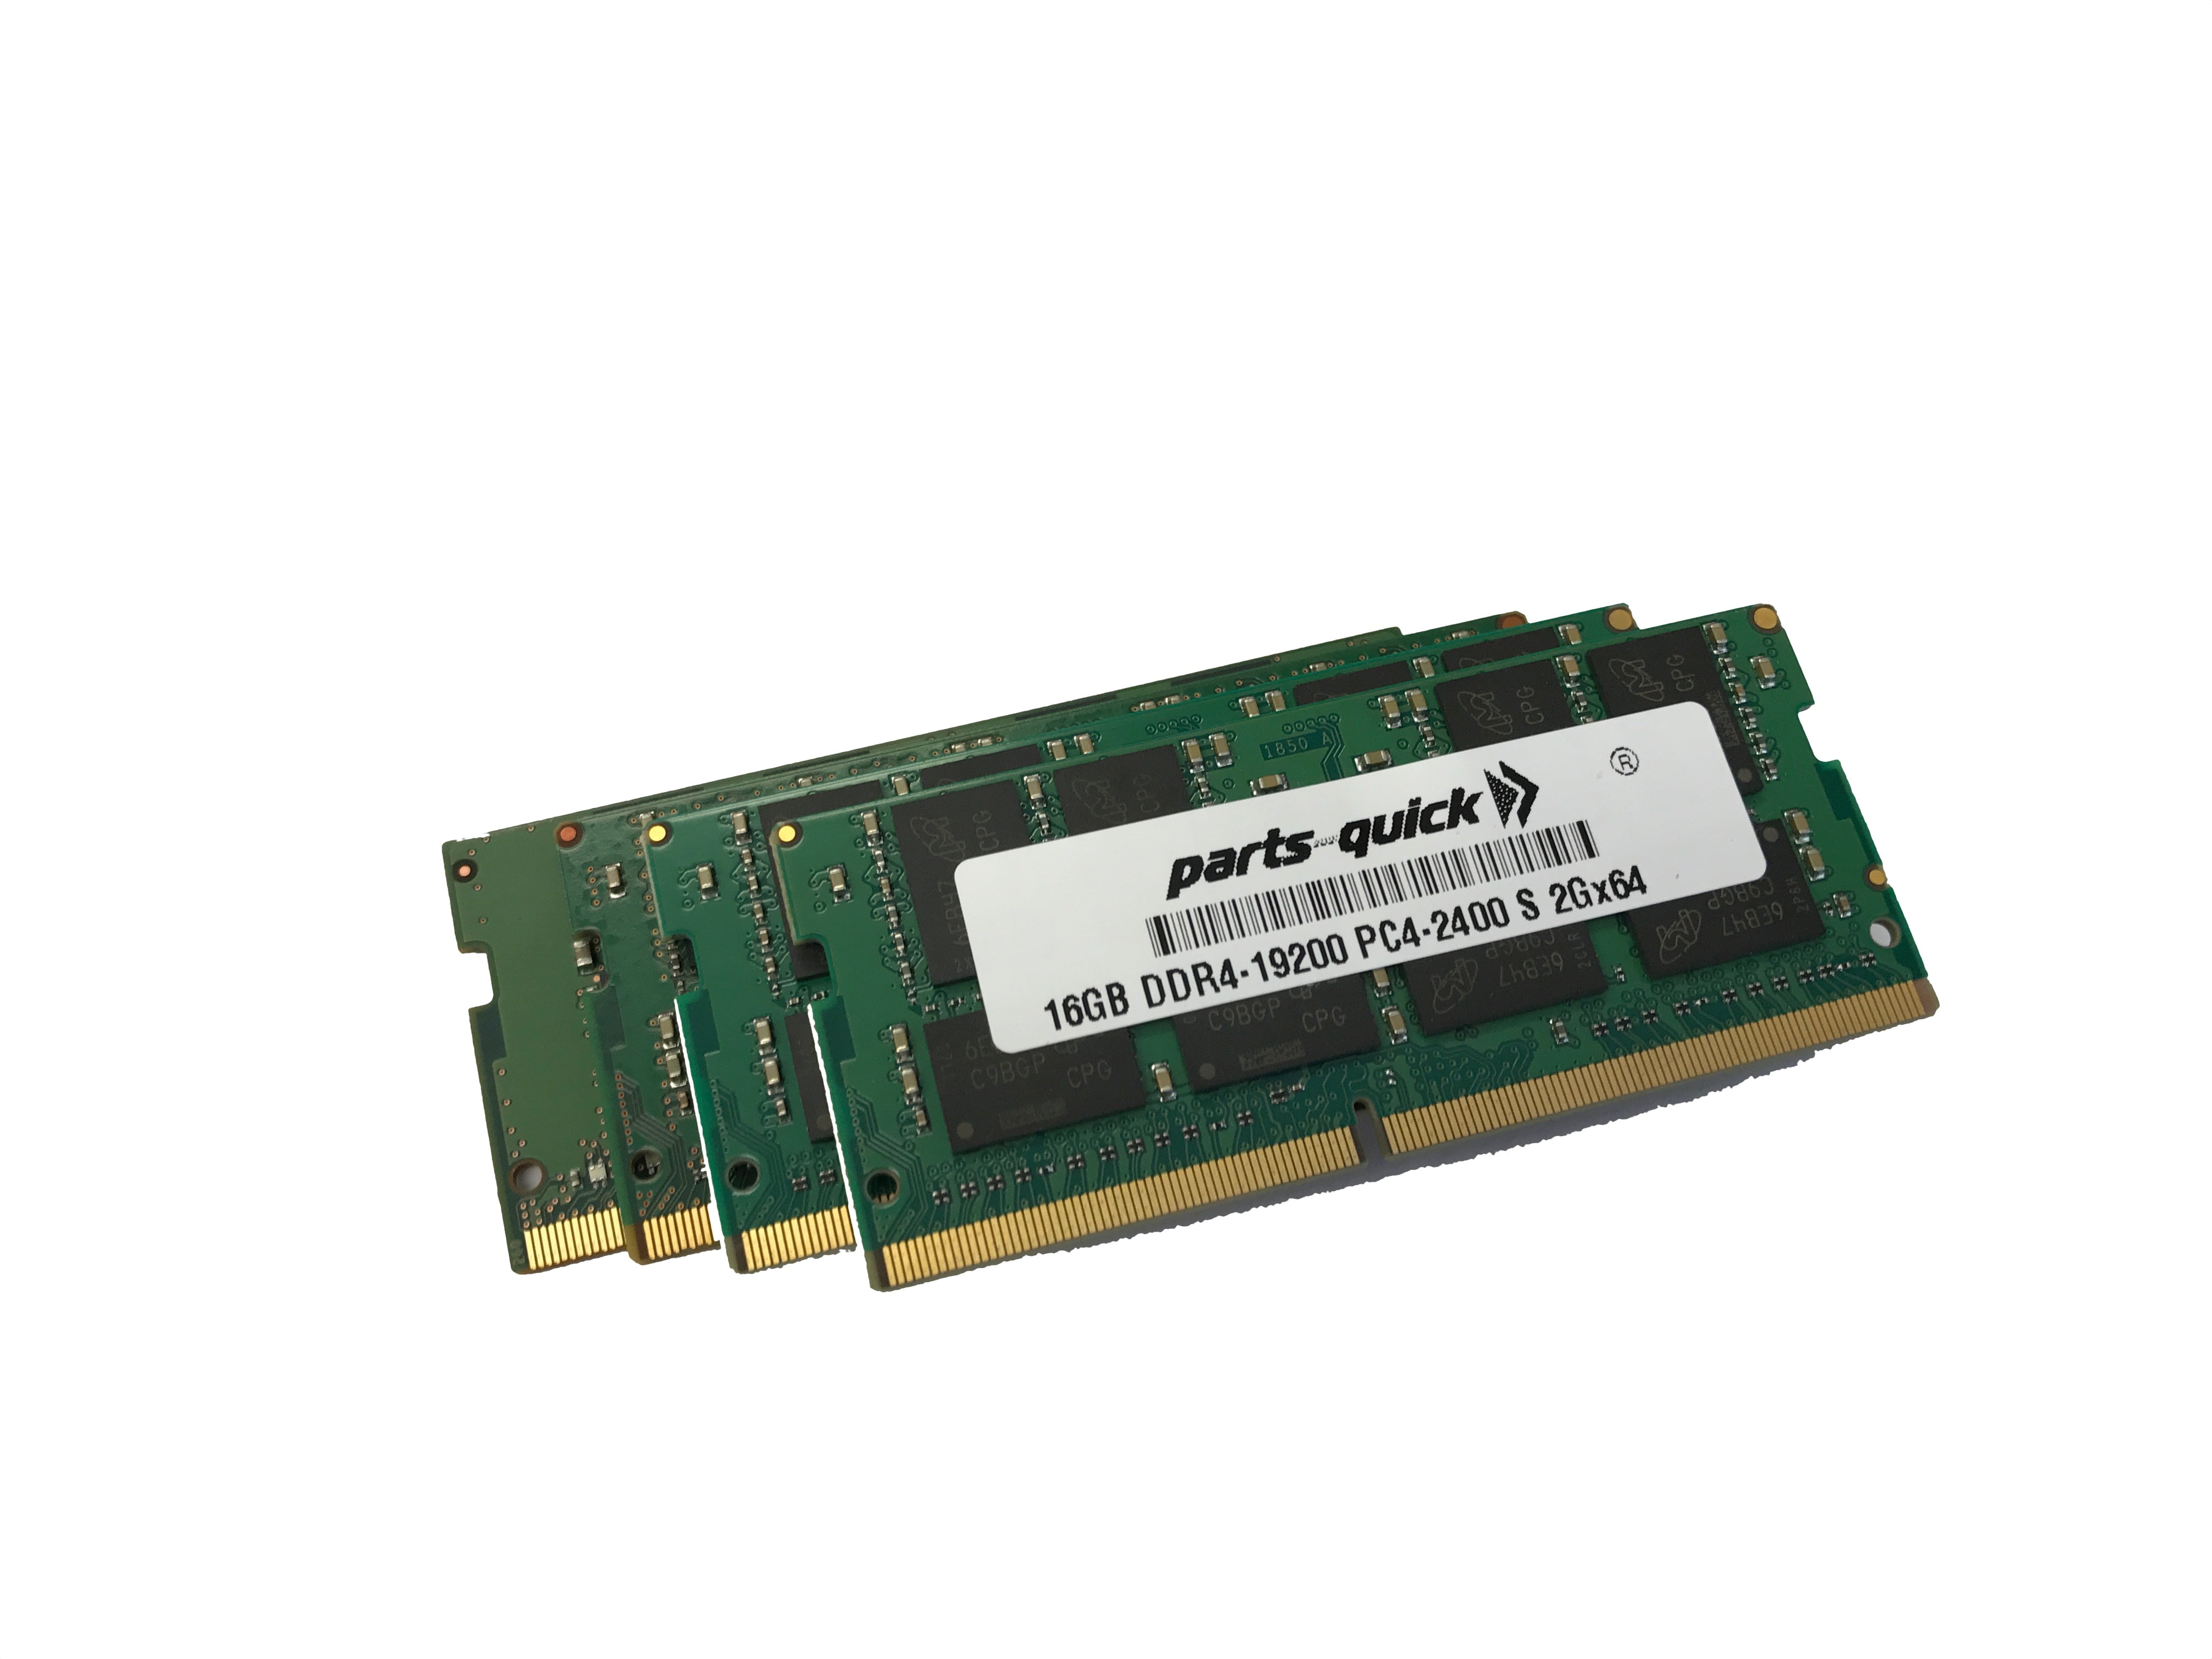 64GB (4X 16GB) PC4-19200 SO-DIMM Laptop RAM Memory Upgrade (PARTS-QUICK) -